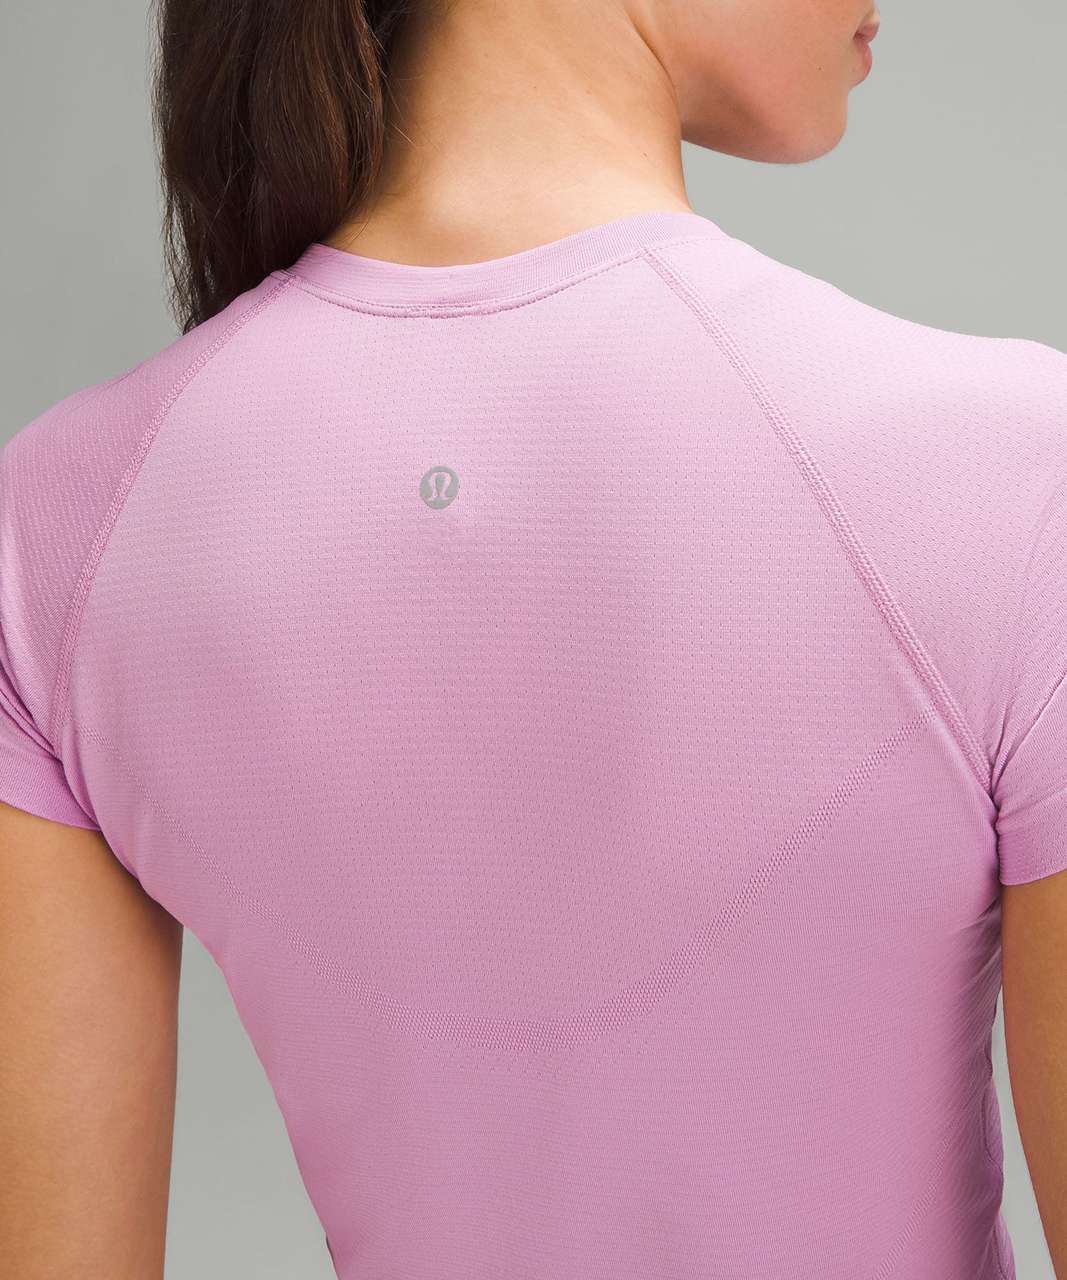 Lululemon Swiftly Tech Cropped Short-Sleeve Shirt 2.0 - Dahlia Mauve / Dahlia Mauve